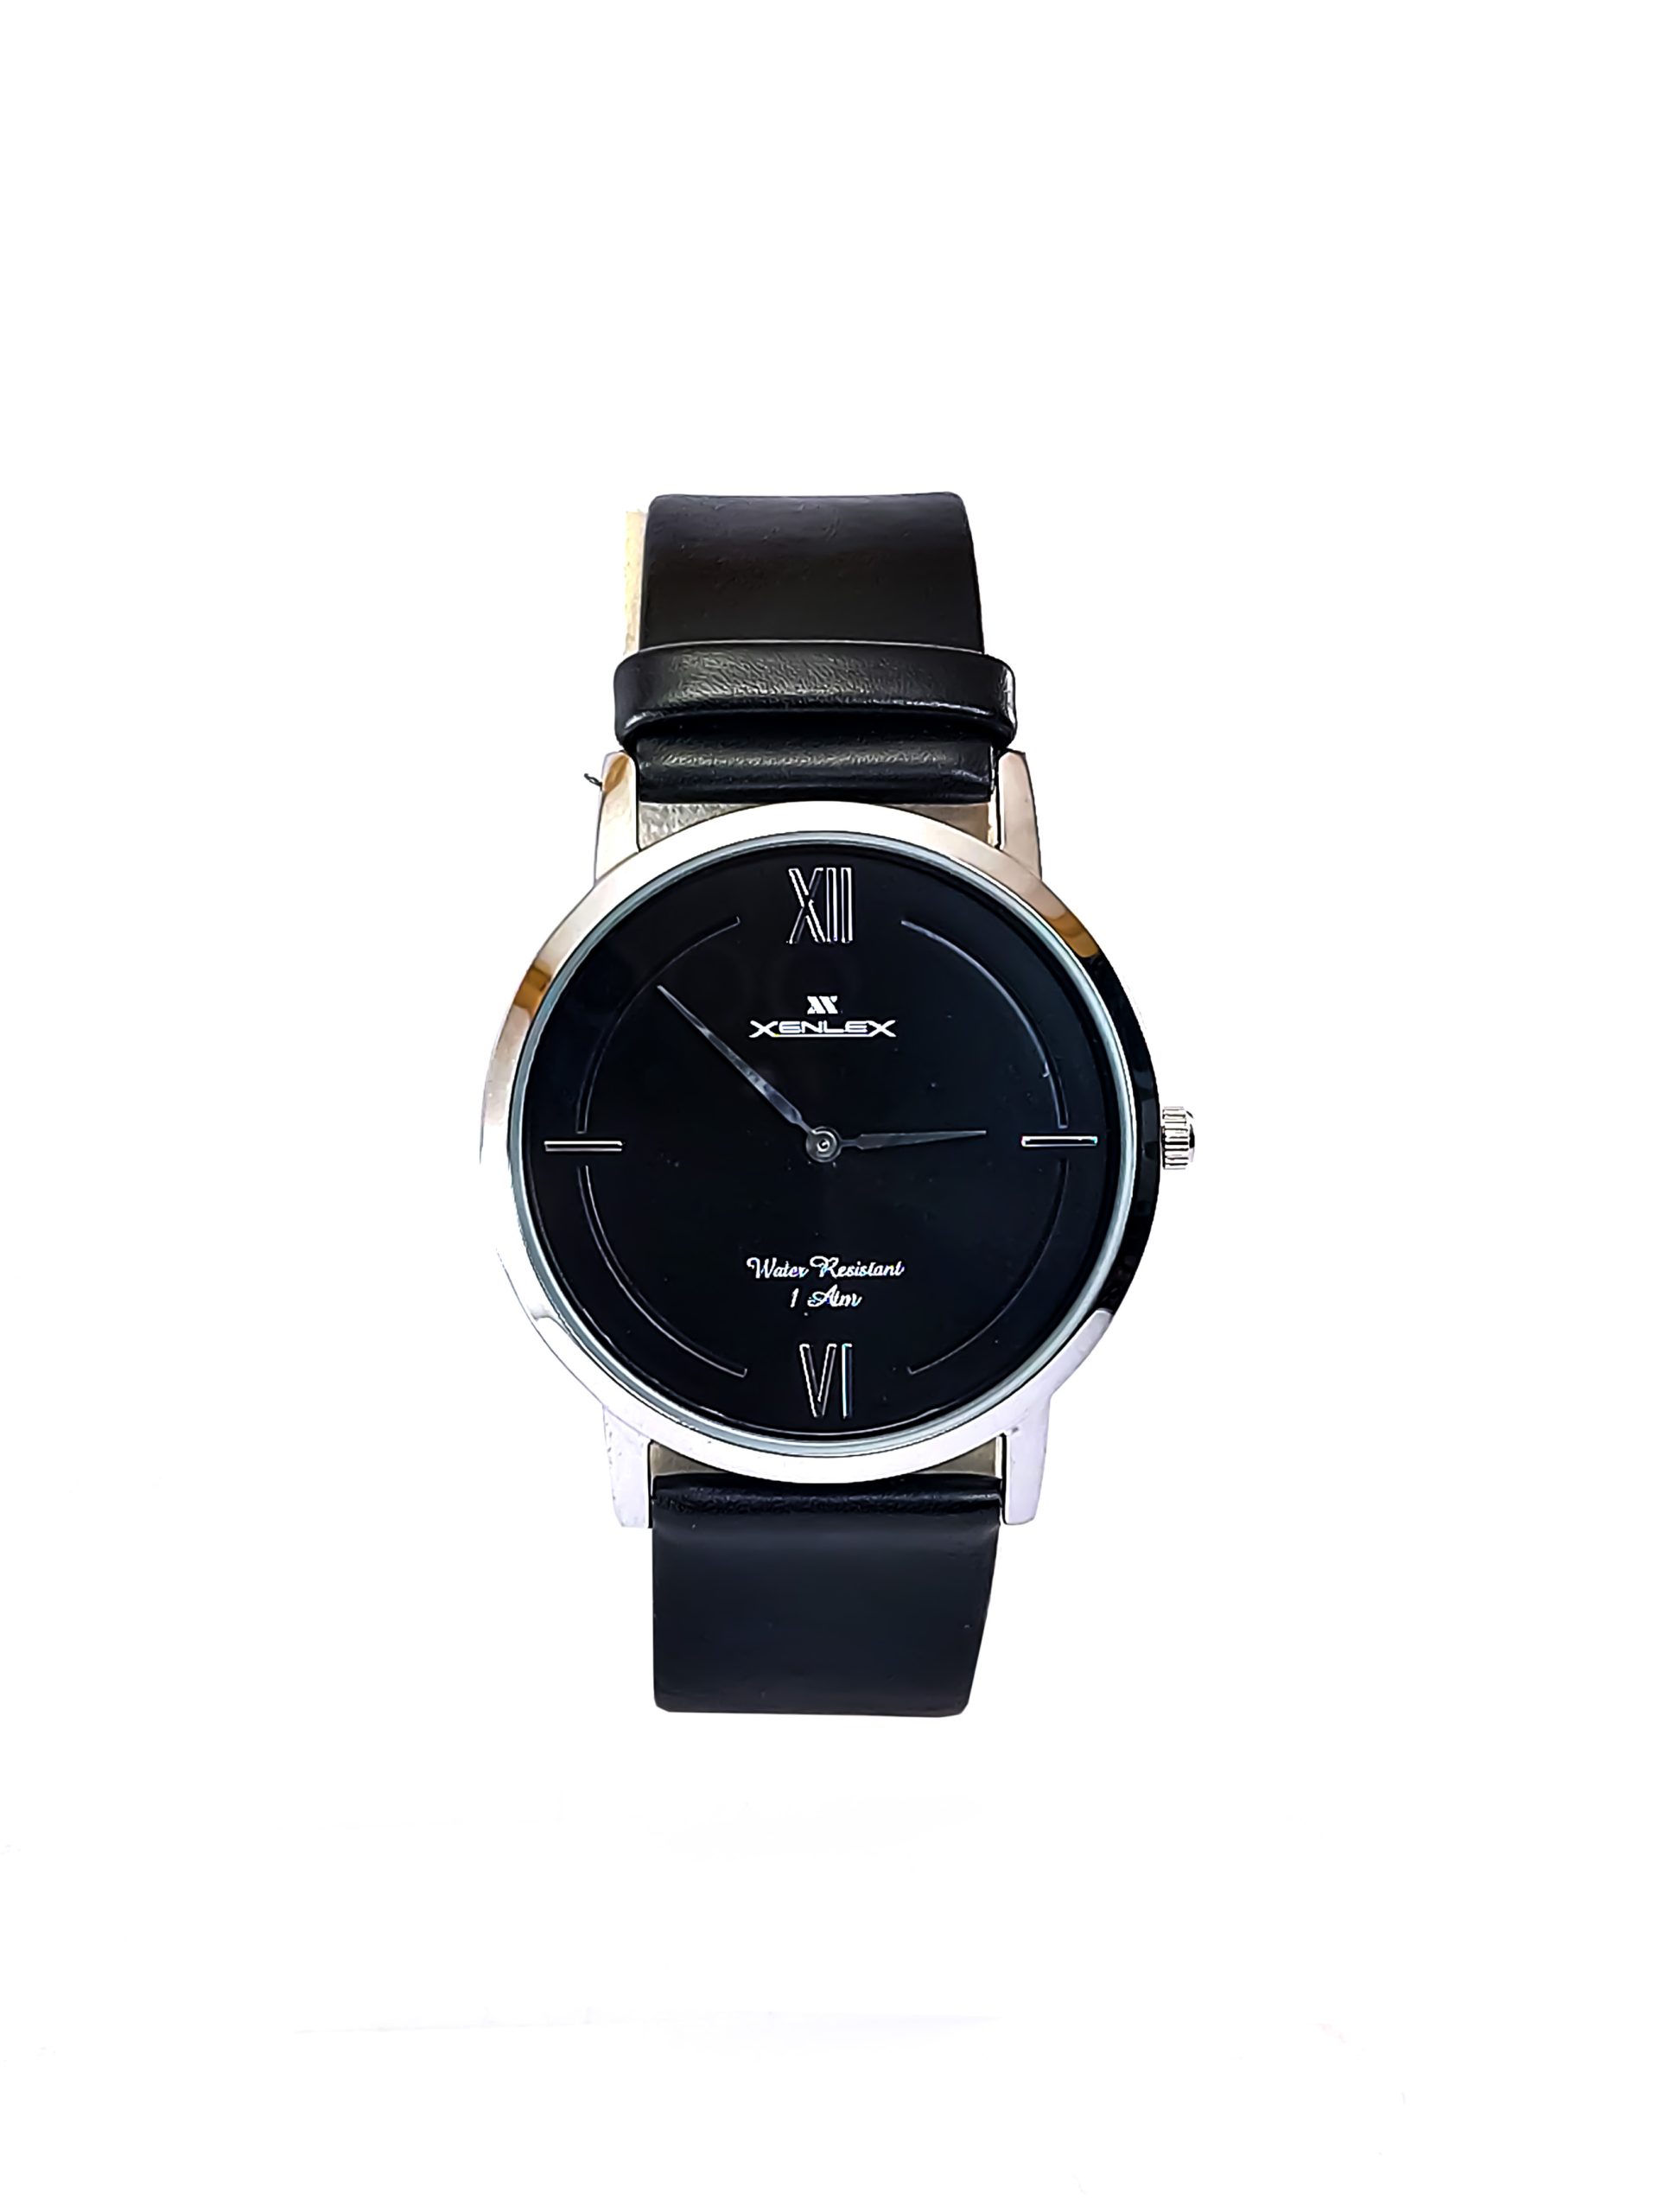 Xenlex Strap Watch For ladies (Black) - Punjab Watch